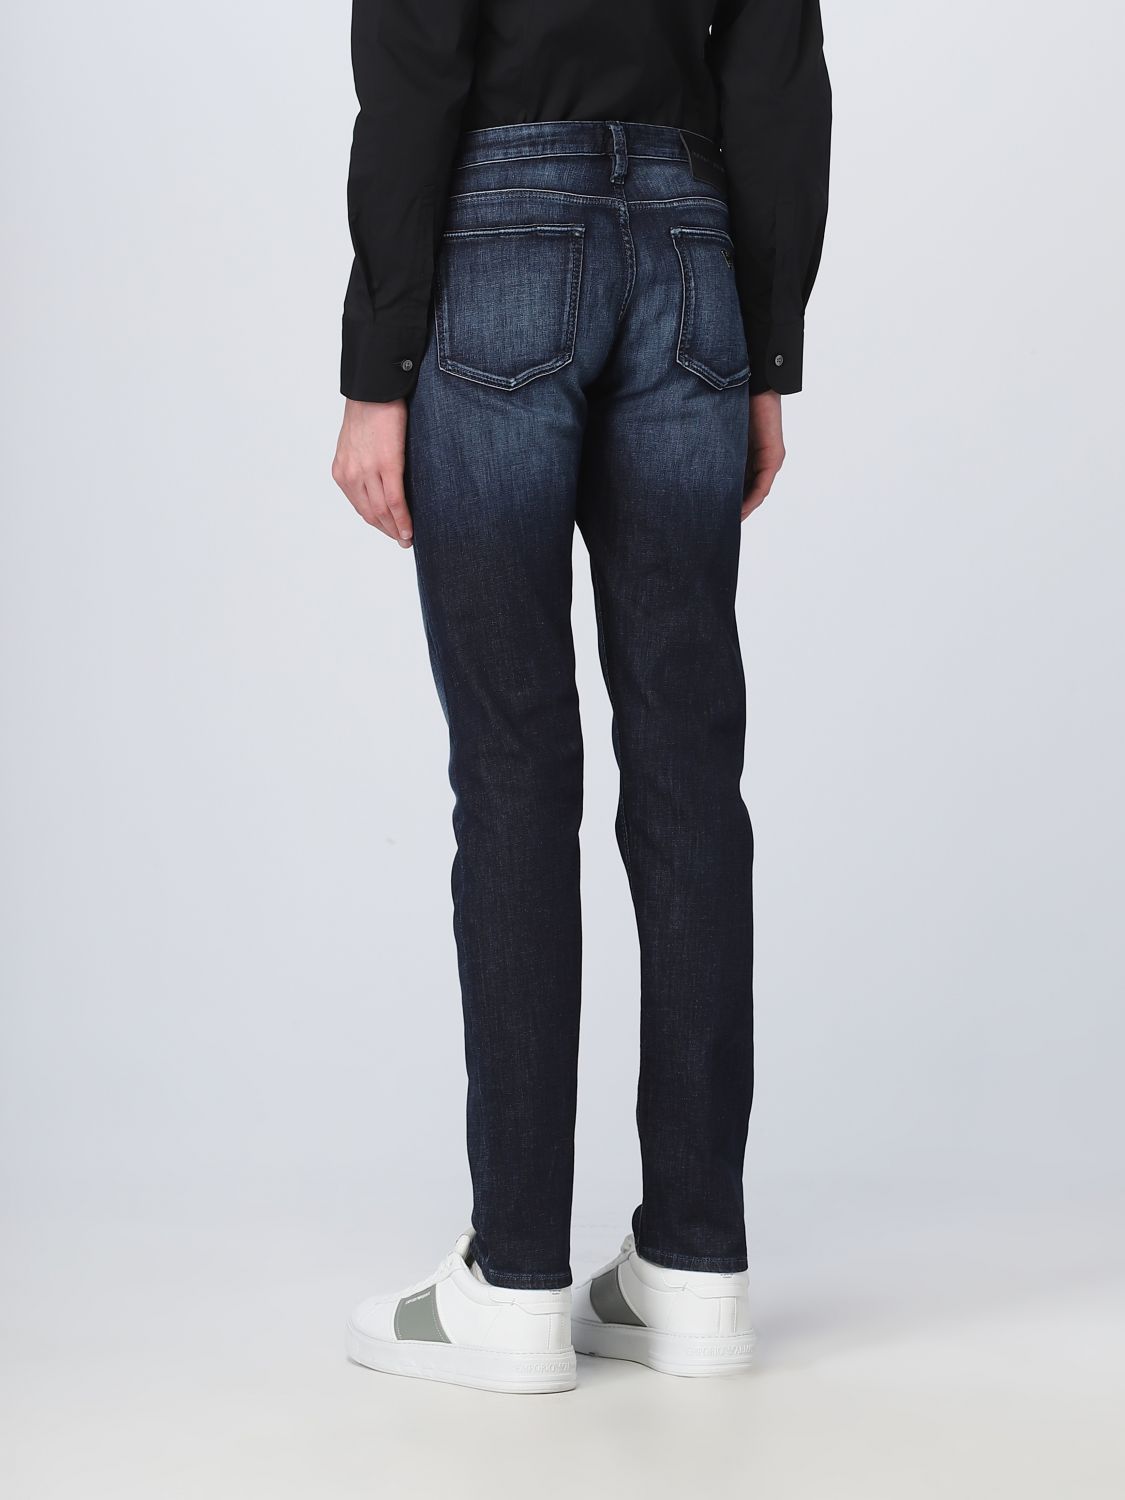 Memoriseren Registratie Vrijlating EMPORIO ARMANI: jeans for man - Denim | Emporio Armani jeans 3R1J751D16Z  online on GIGLIO.COM